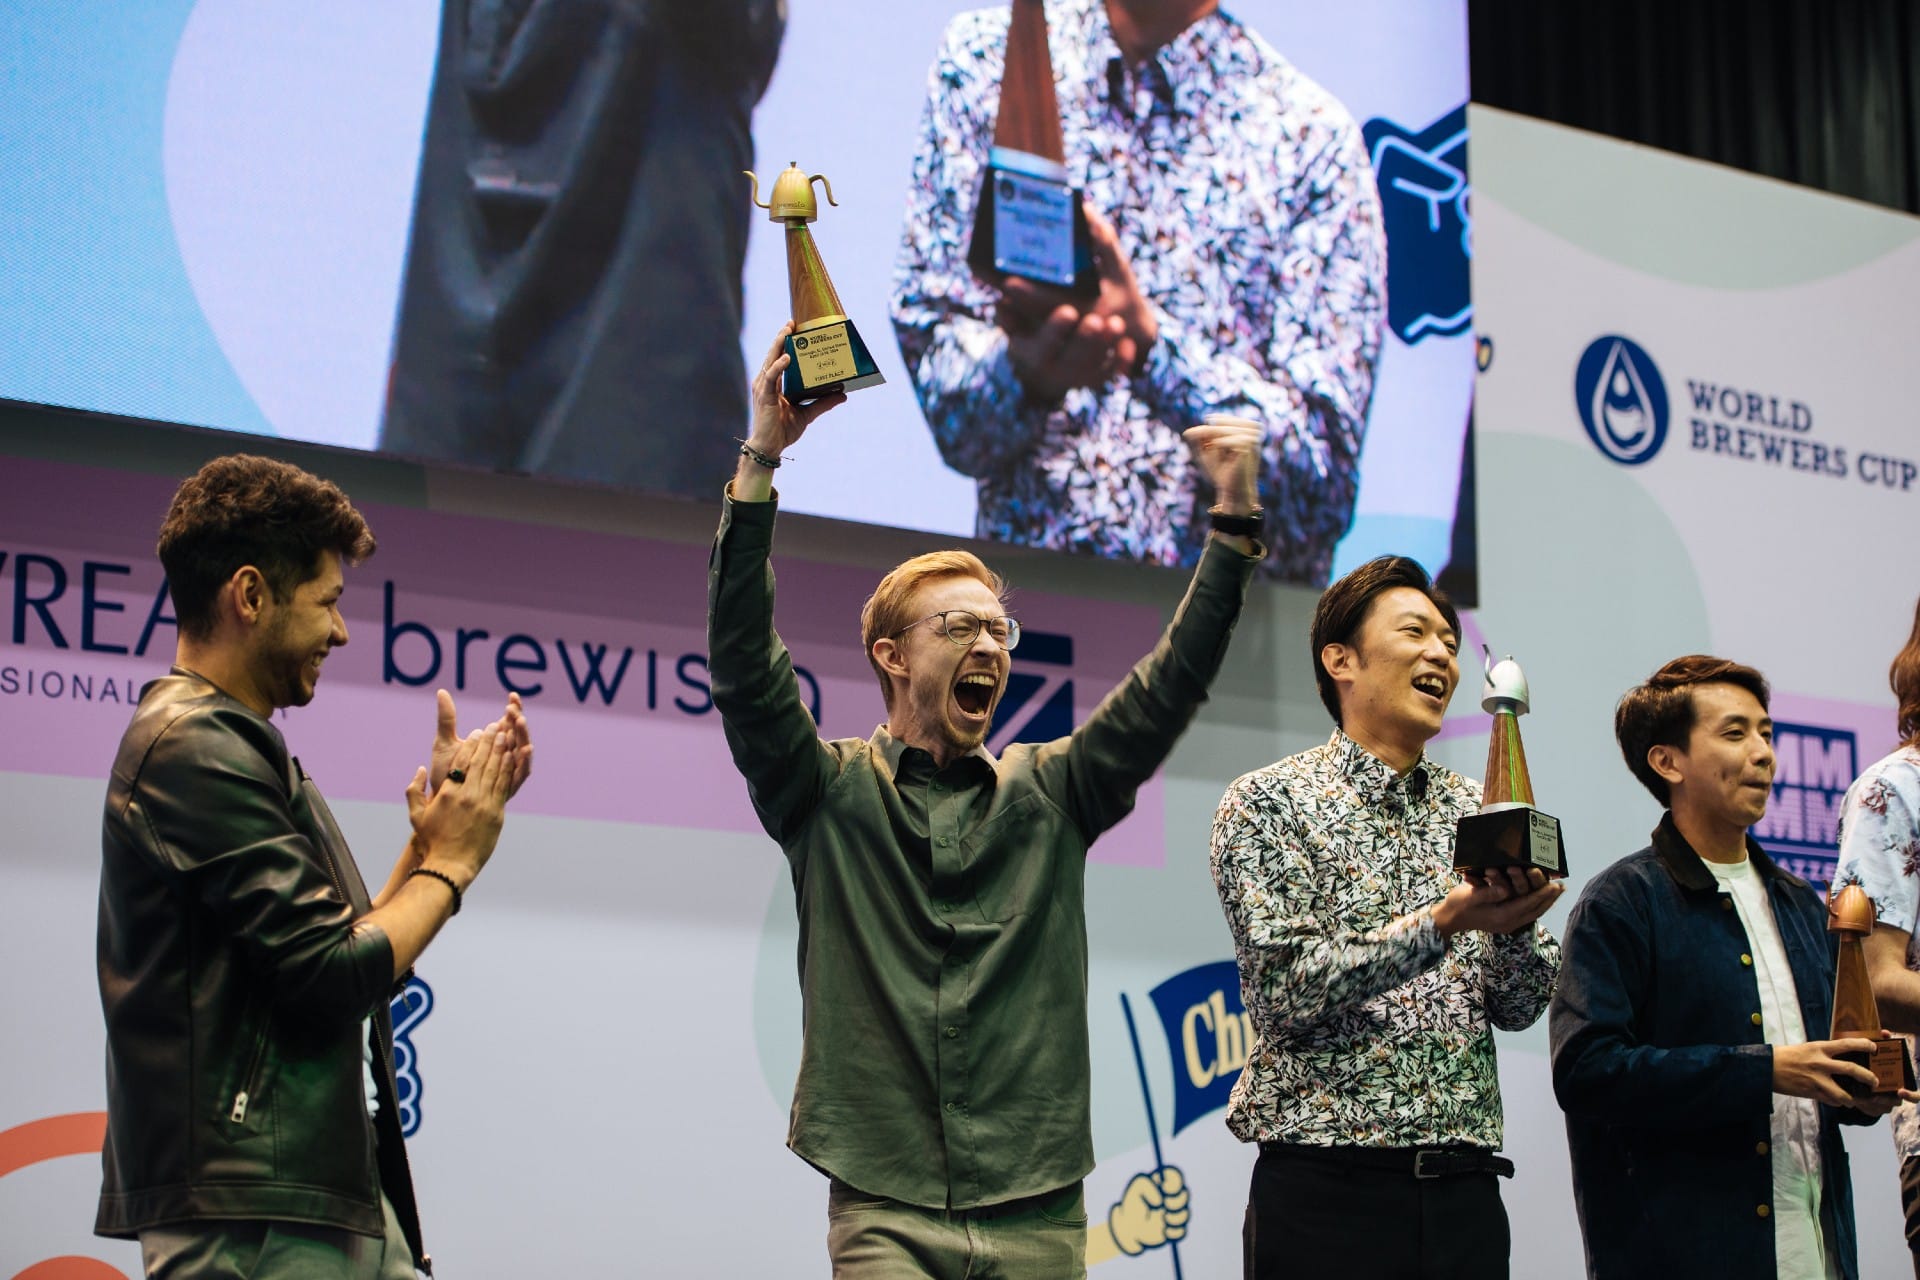 Martin Wölfl of Austria wins World Brewers Cup Championship - The ...